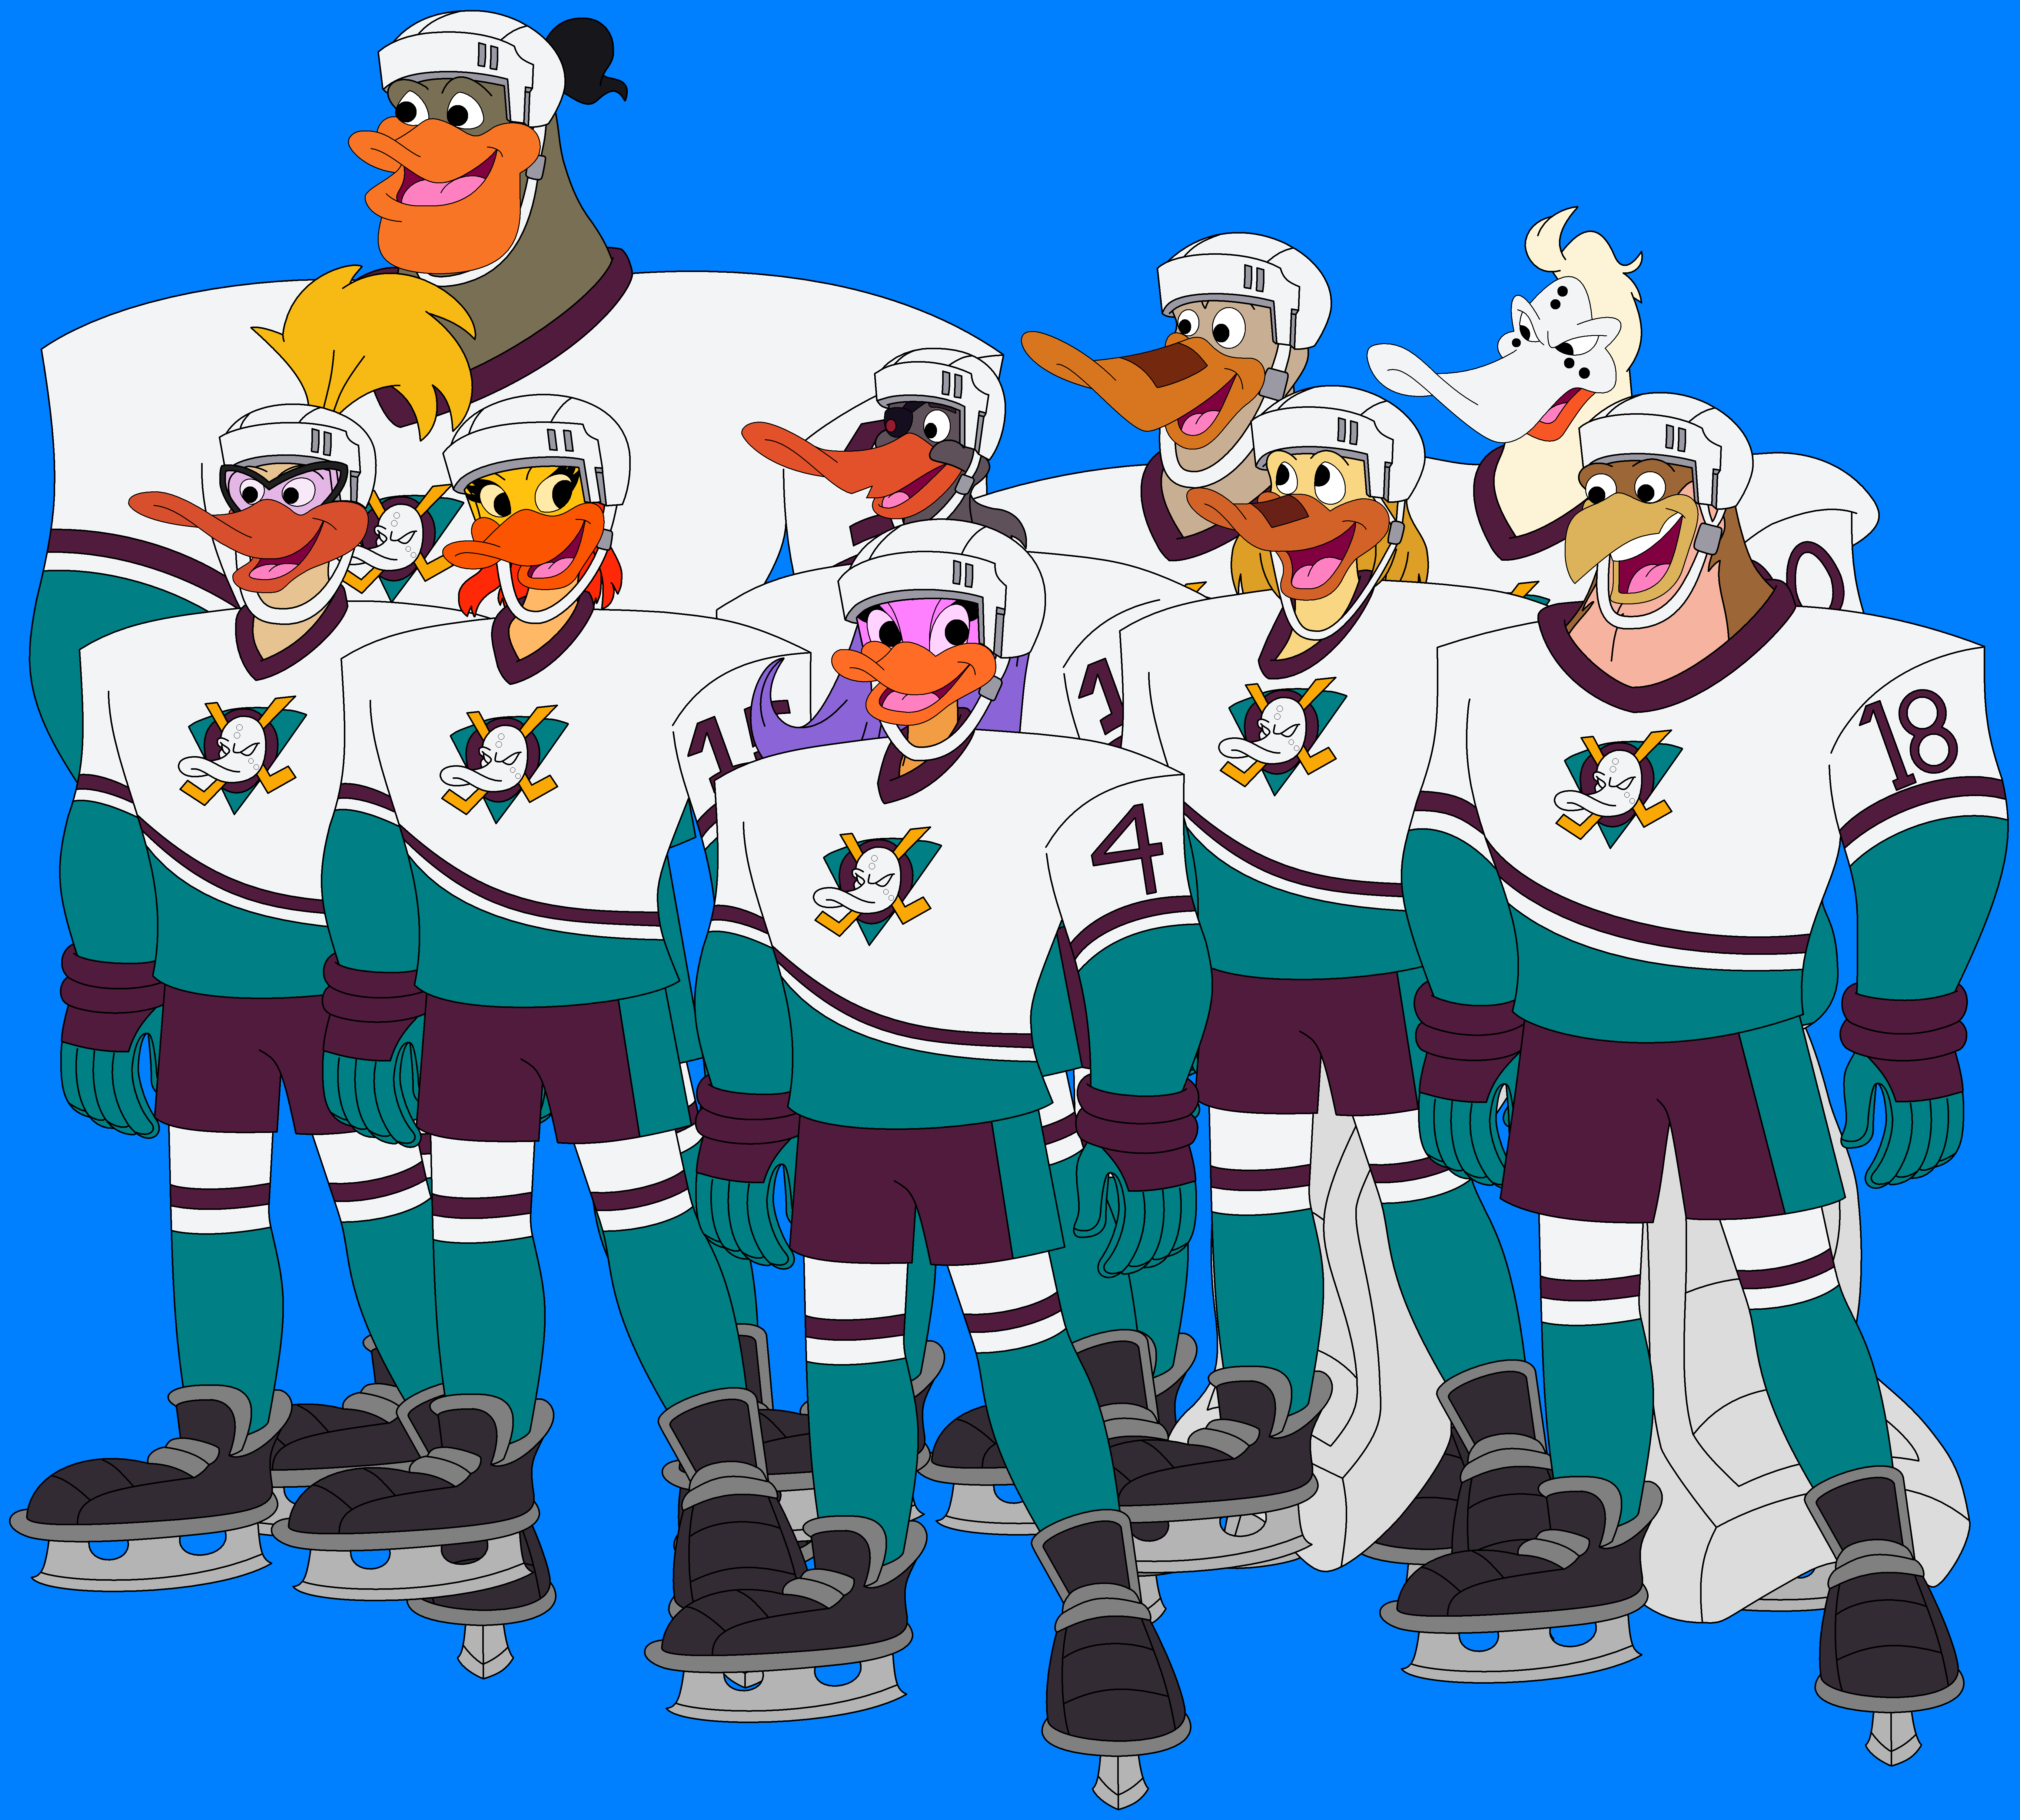 ArtStation - D1: The Mighty Ducks